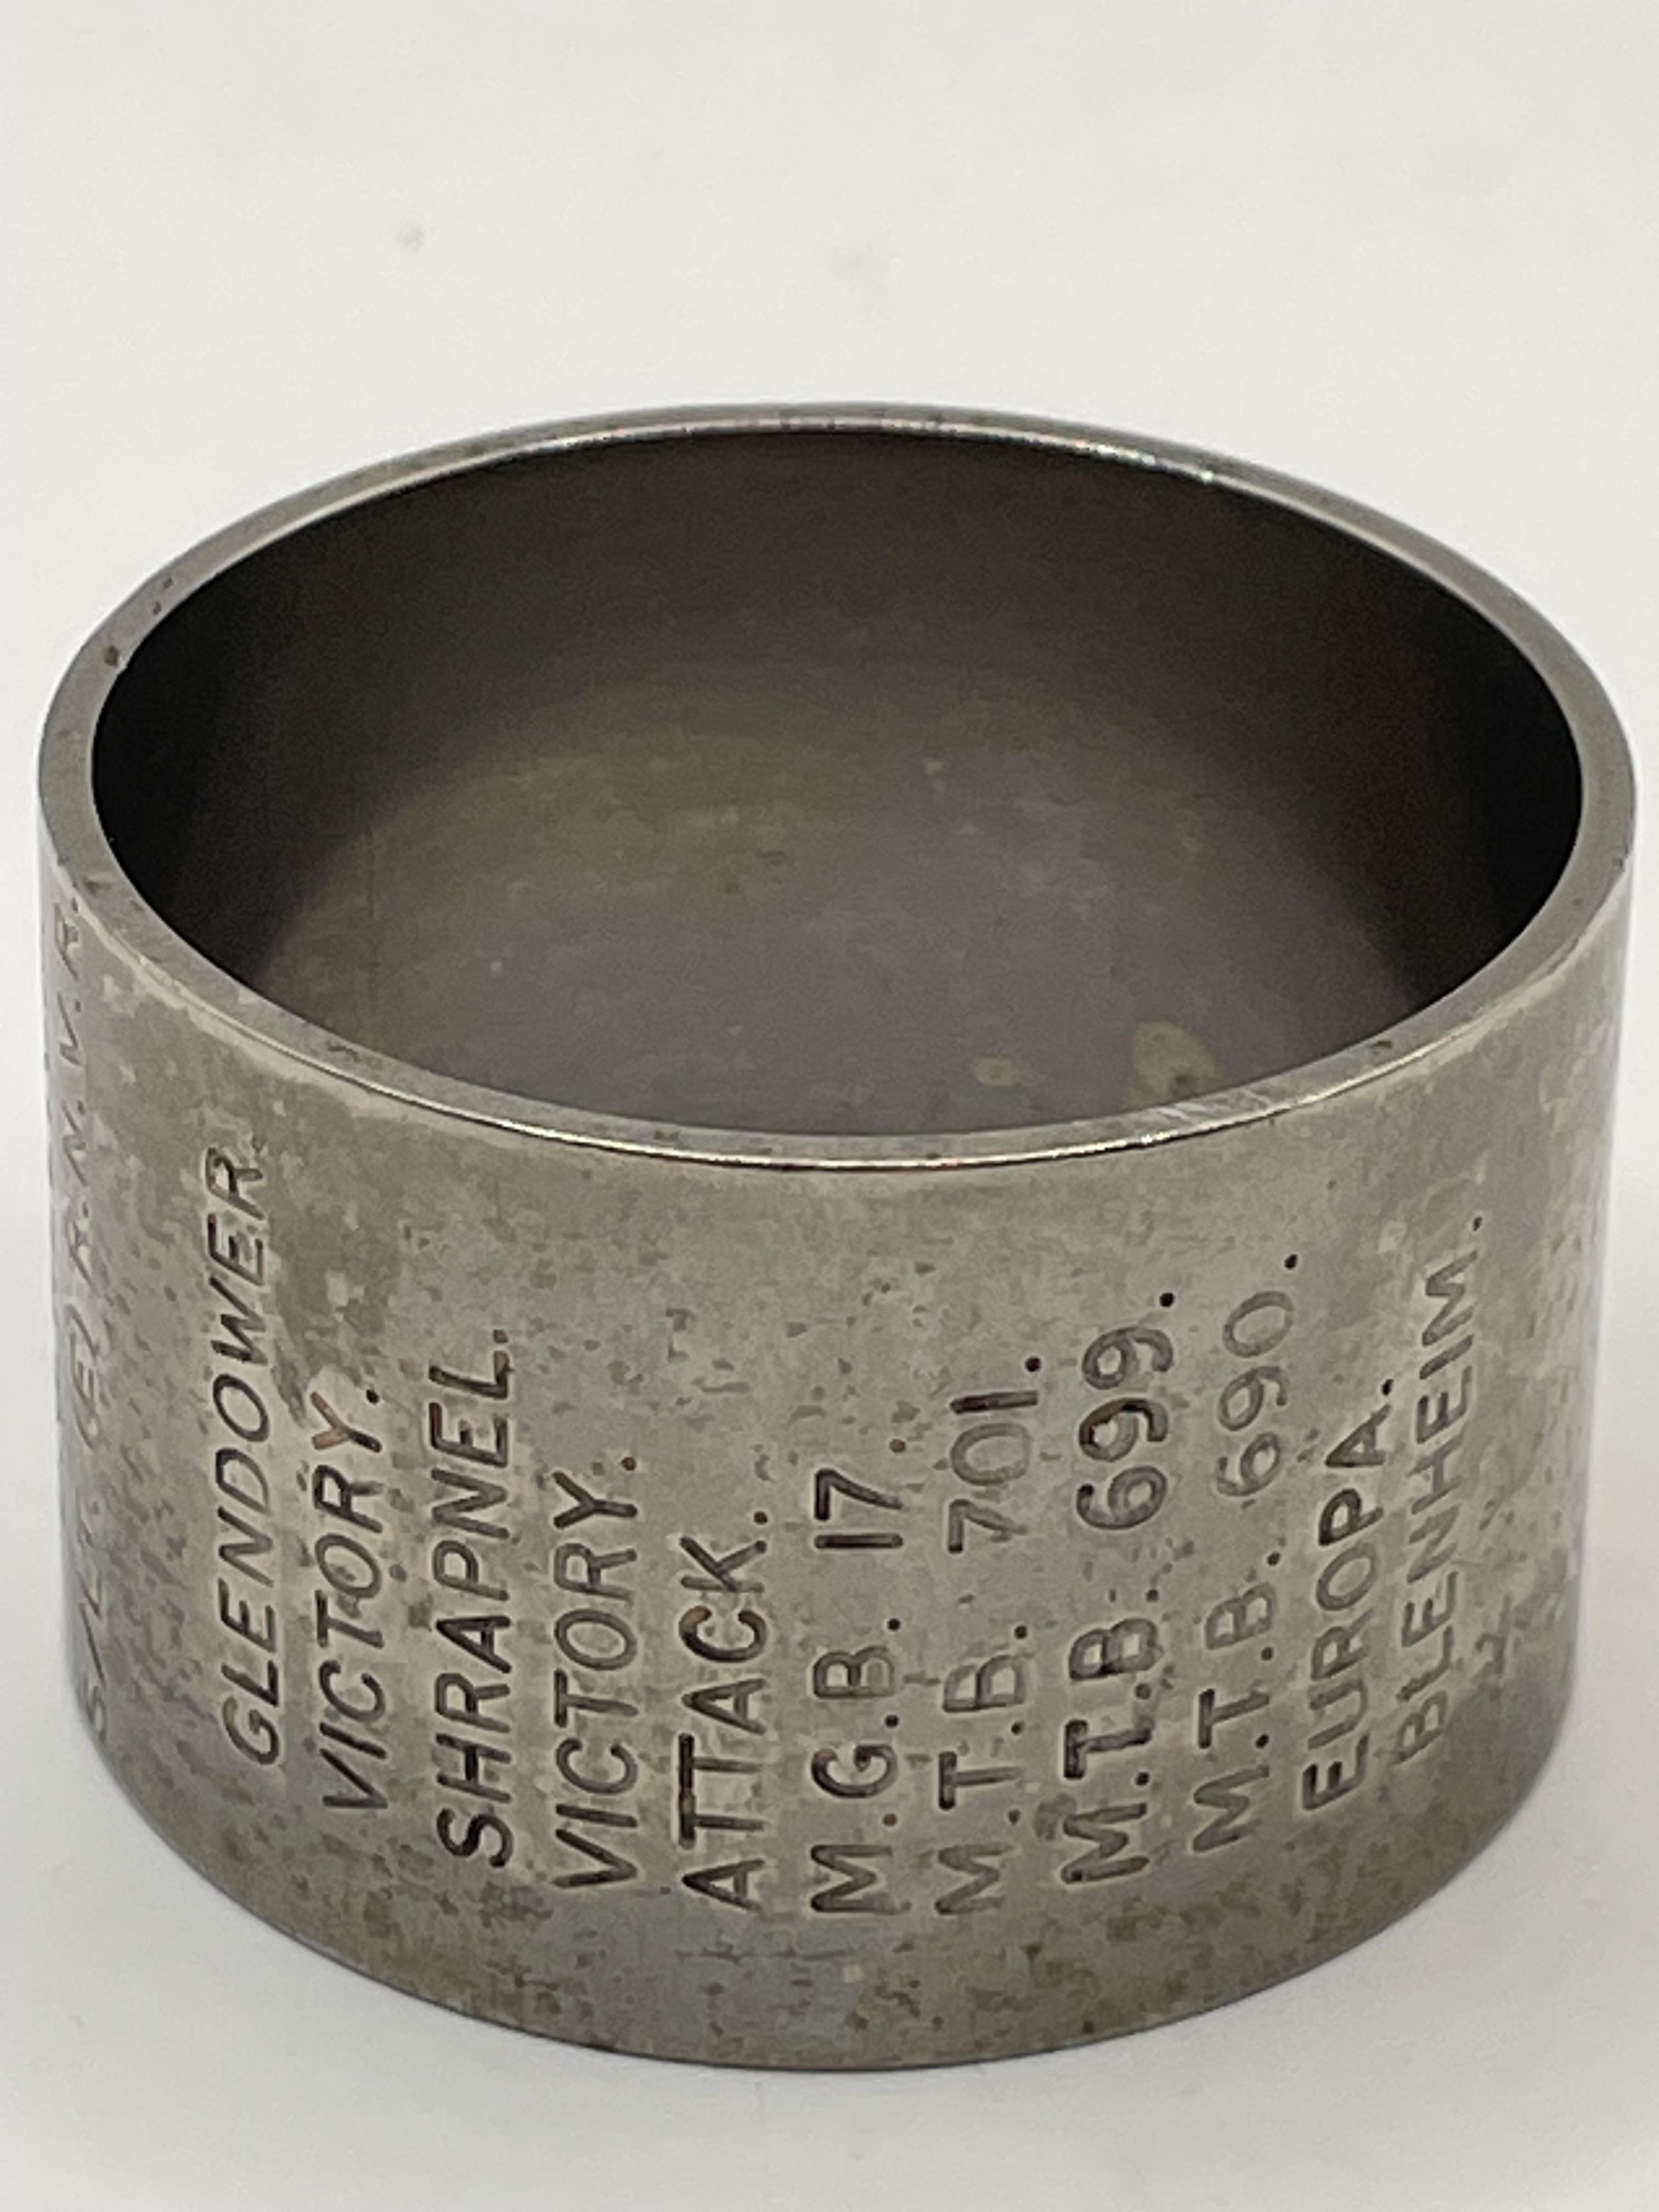 WW1-2 Blenheim war ship memorial napkin/serviette ring. Inscribed in dates of importance regarding t